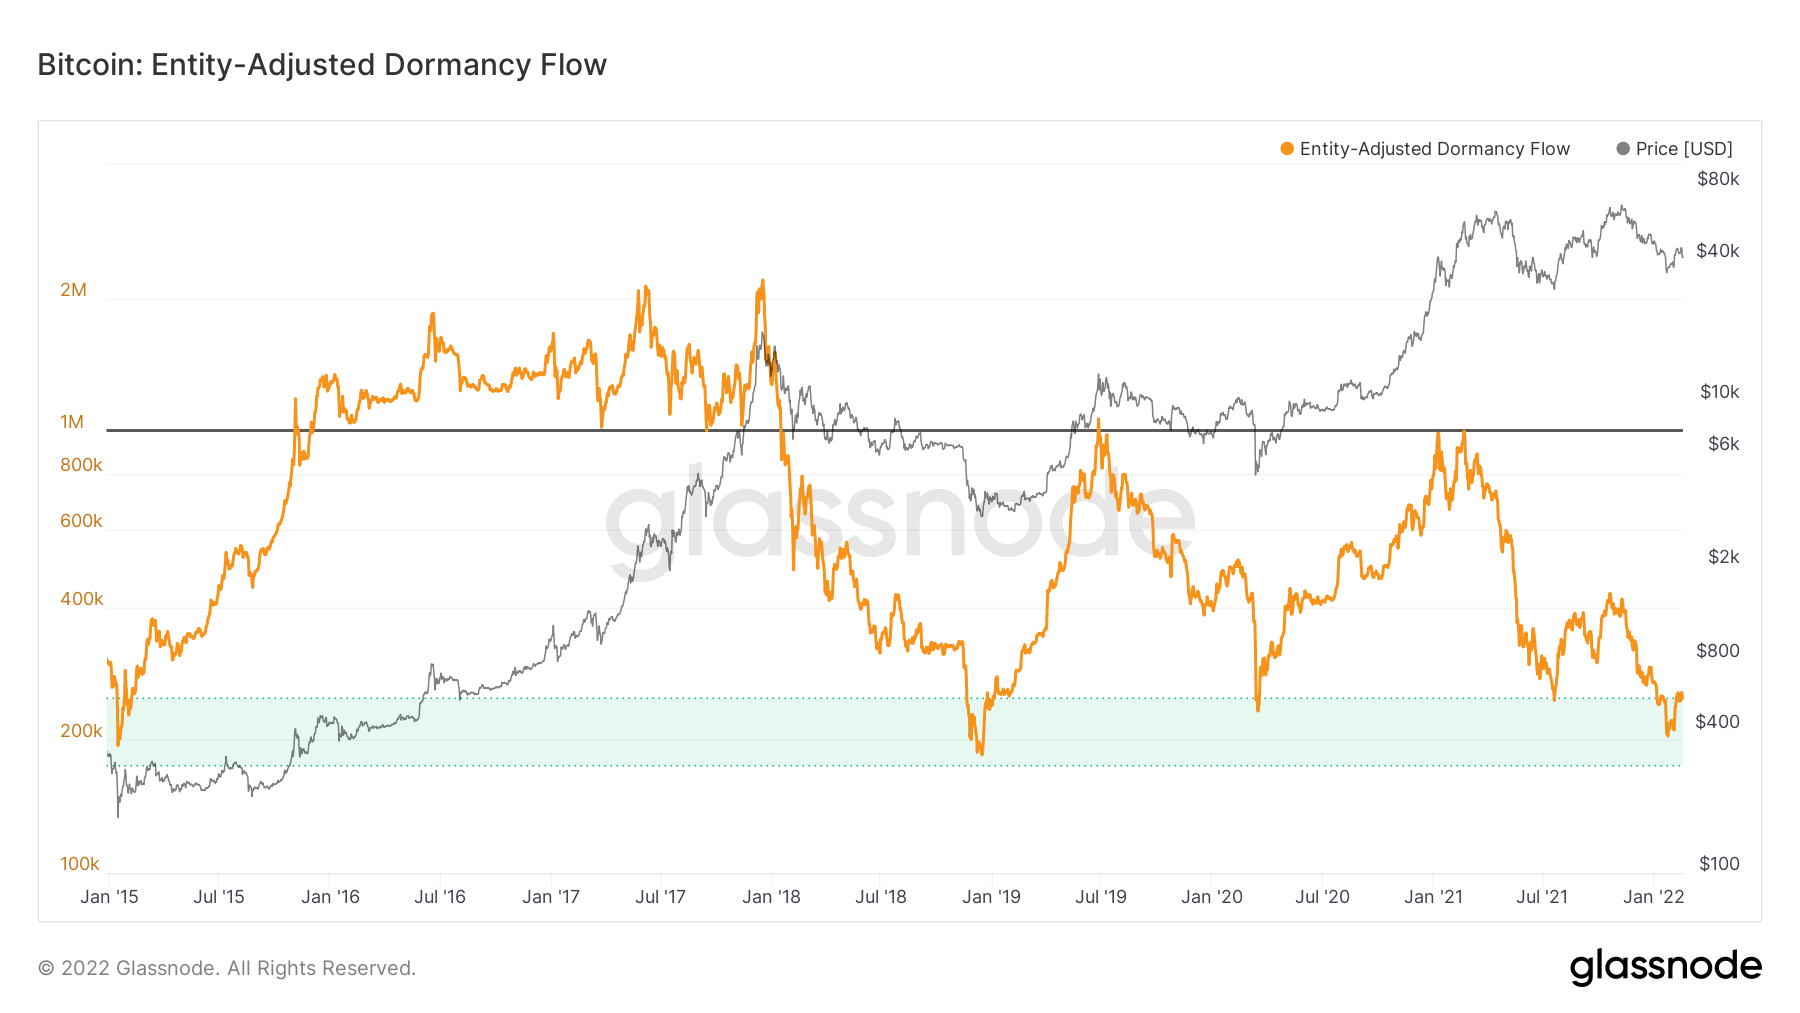 BTC entity-adjusted dormancy flow